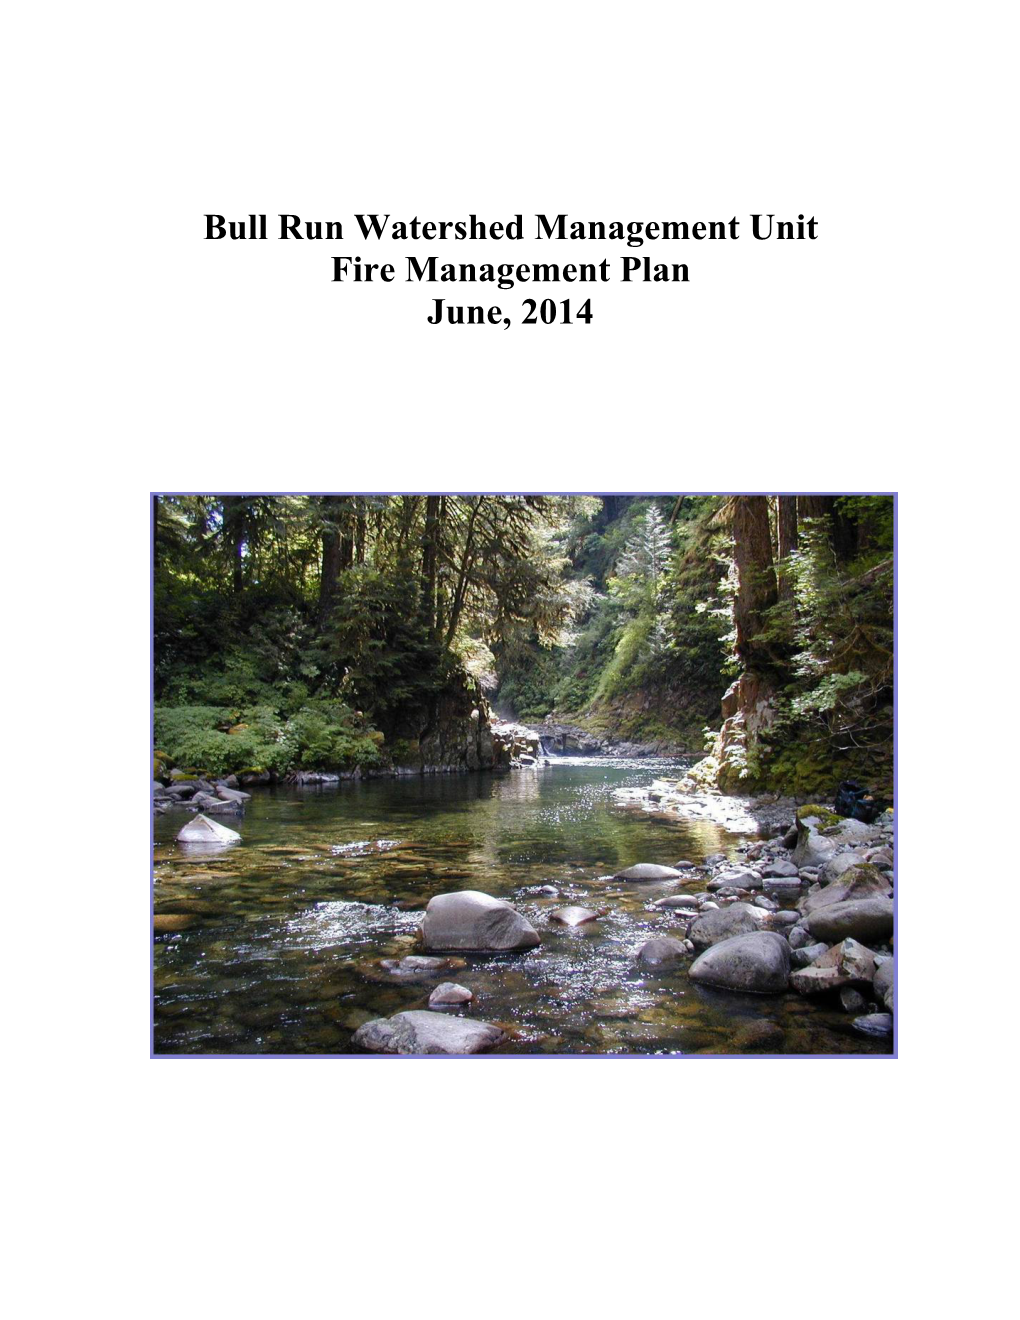 Bull Run Watershed Management Unit Fire Management Plan June, 2014